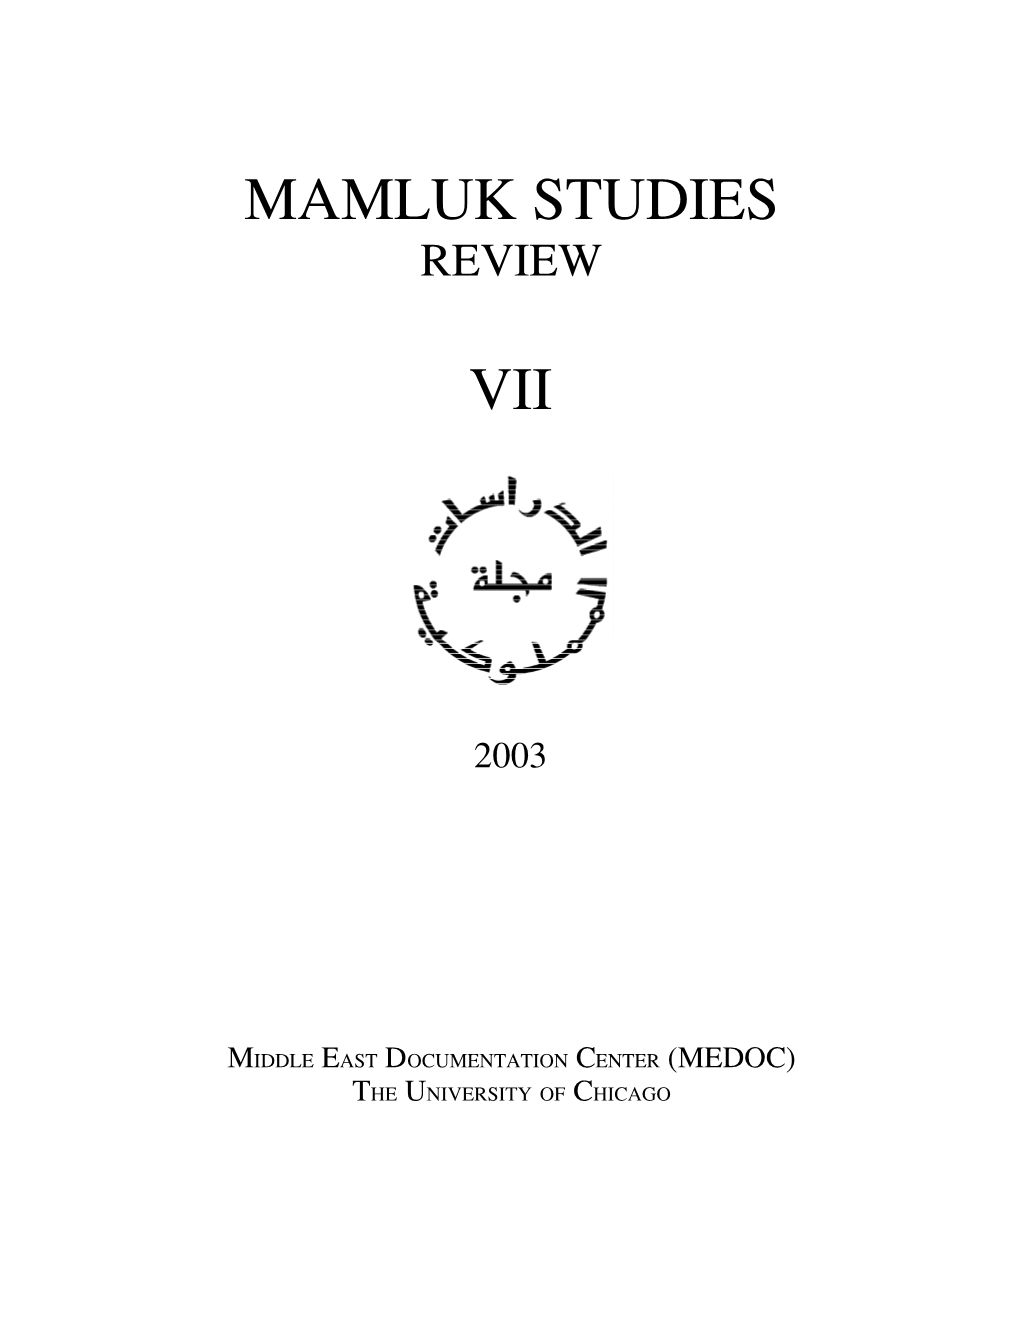 Mamluk Studies Review Vol. VII, No. 1 (2003)